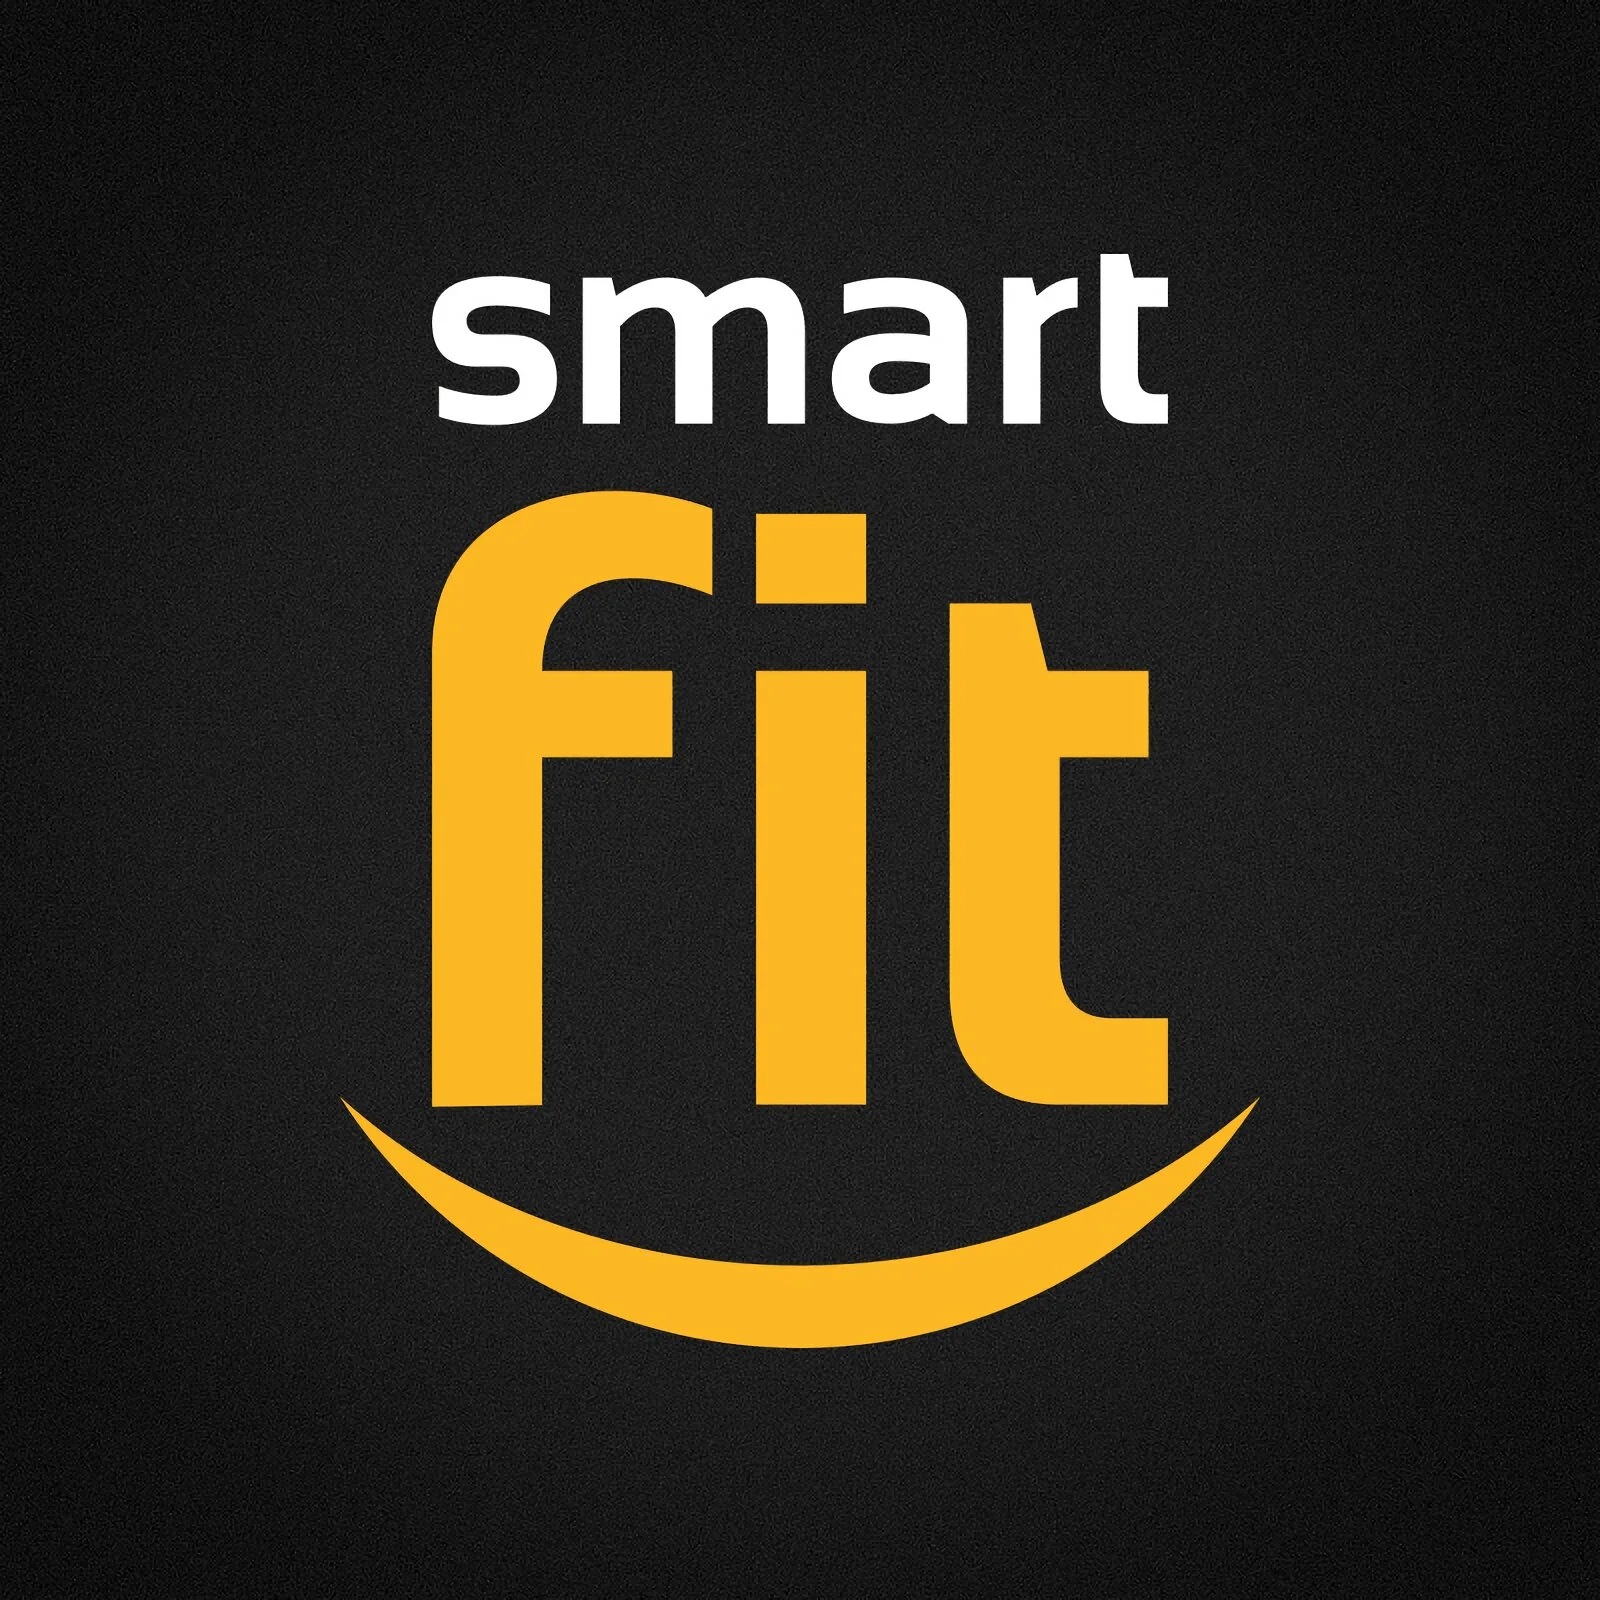 Gimnasio-gimnasio-smart-fit-exito-colombia-4712